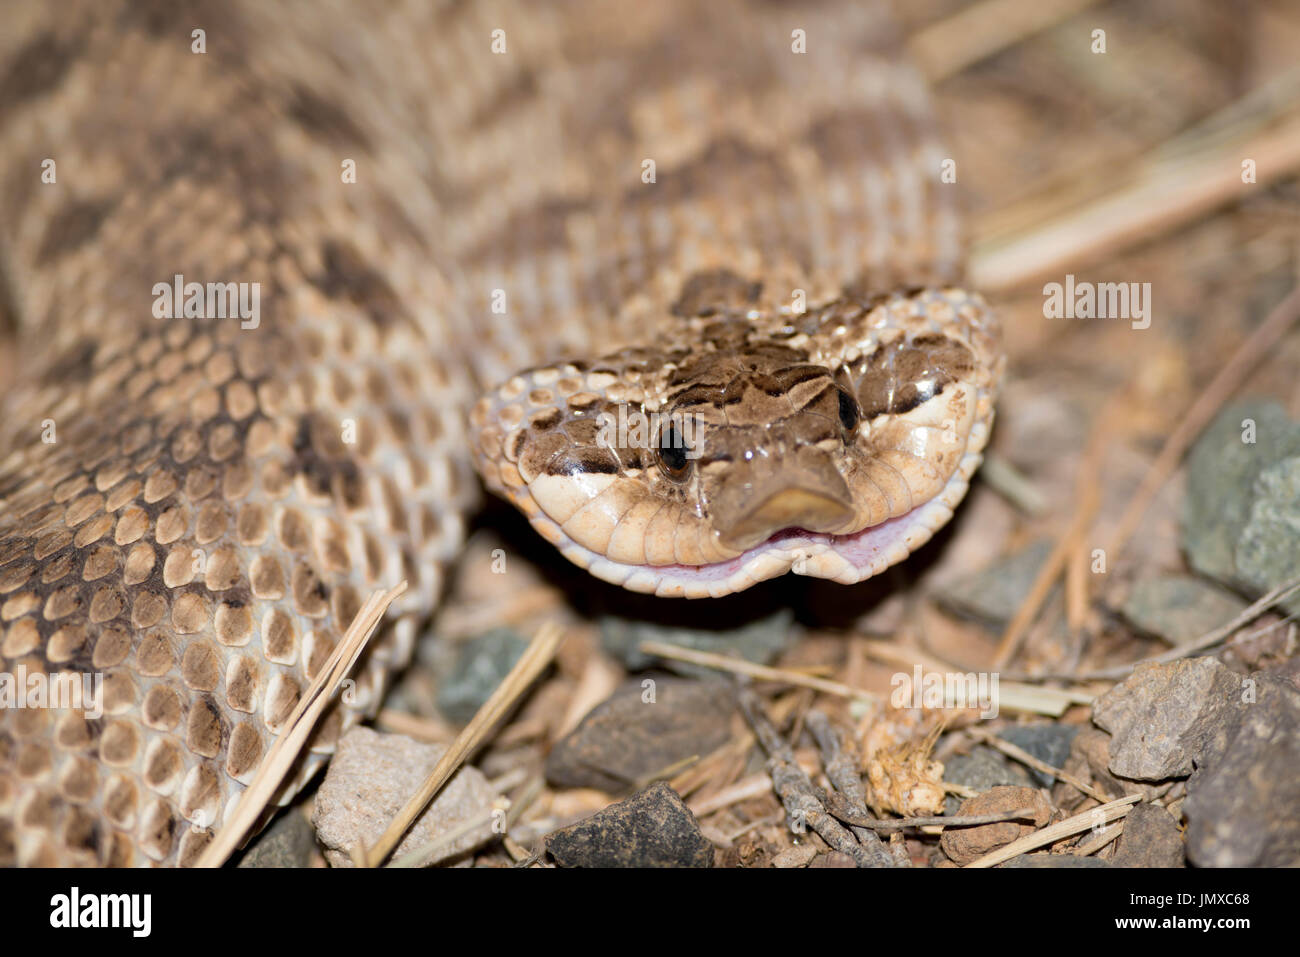 Mexican Hog-nosed Snake, (Heterodon kennerlyi), Hidalgo co., New Mexico, USA. Stock Photo